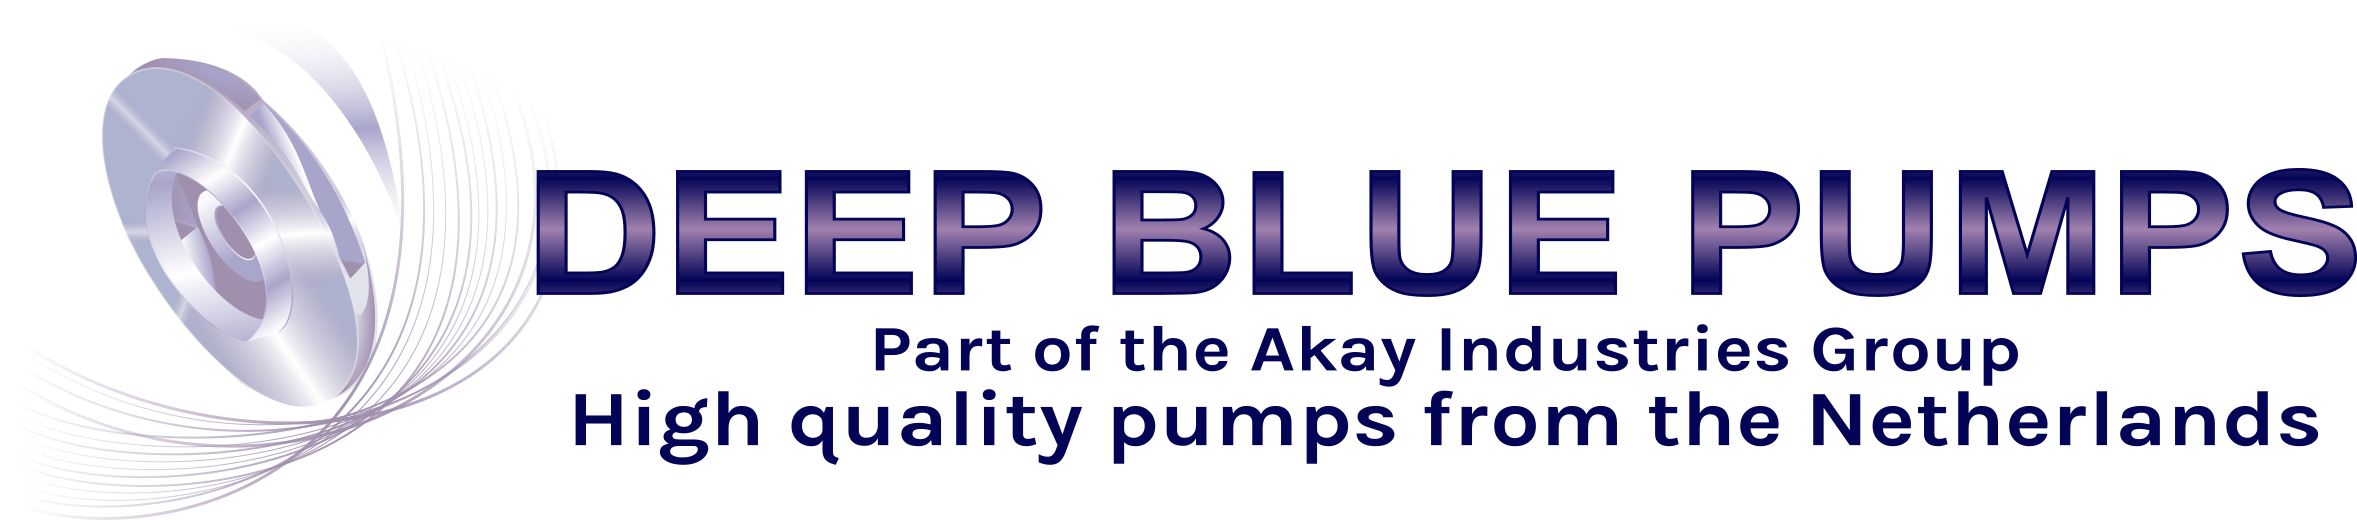 Deep Blue Pumps